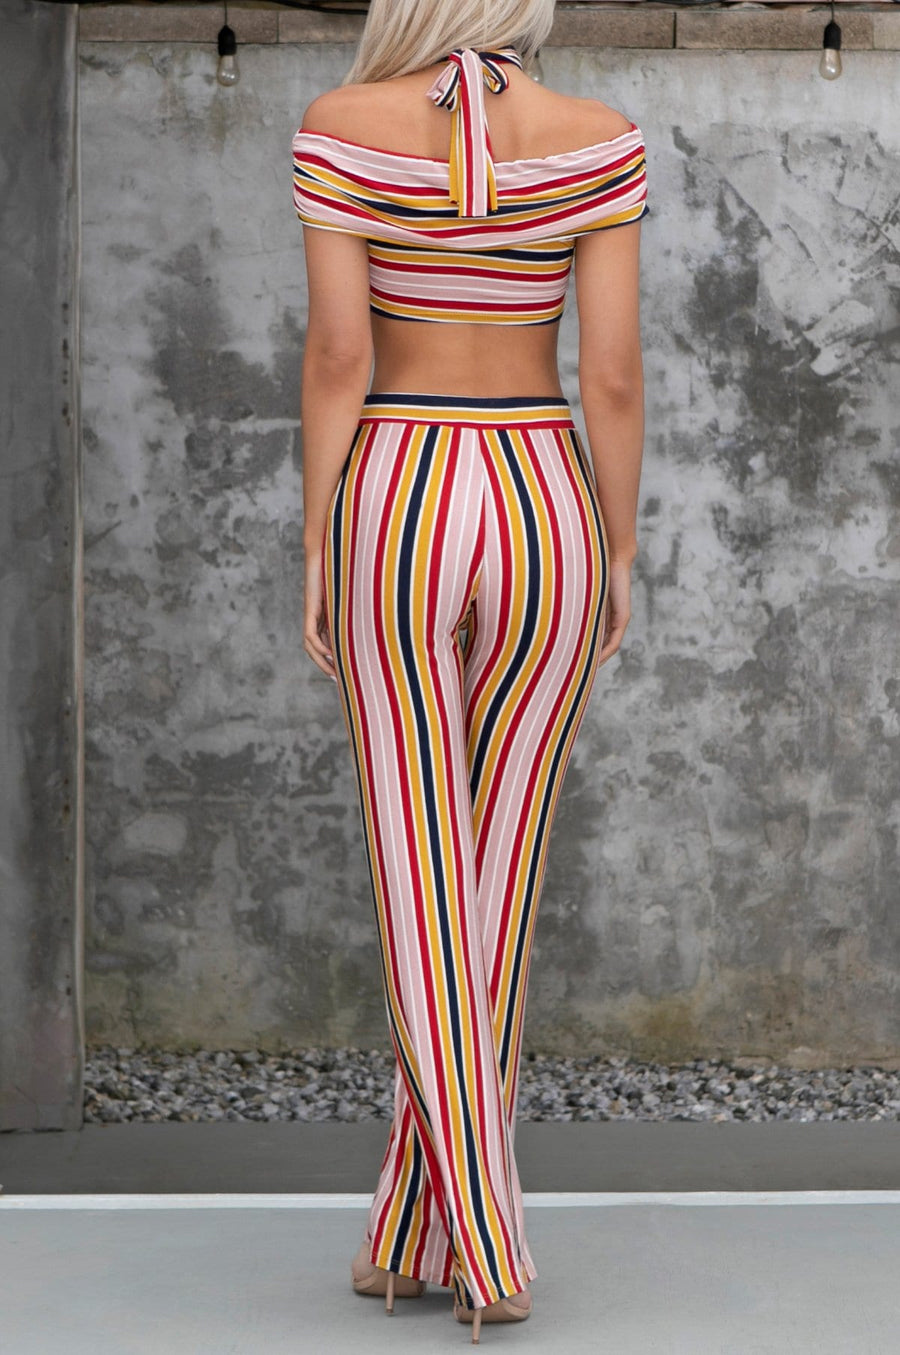 'Zahara' Striped Crop Top & Pants Set